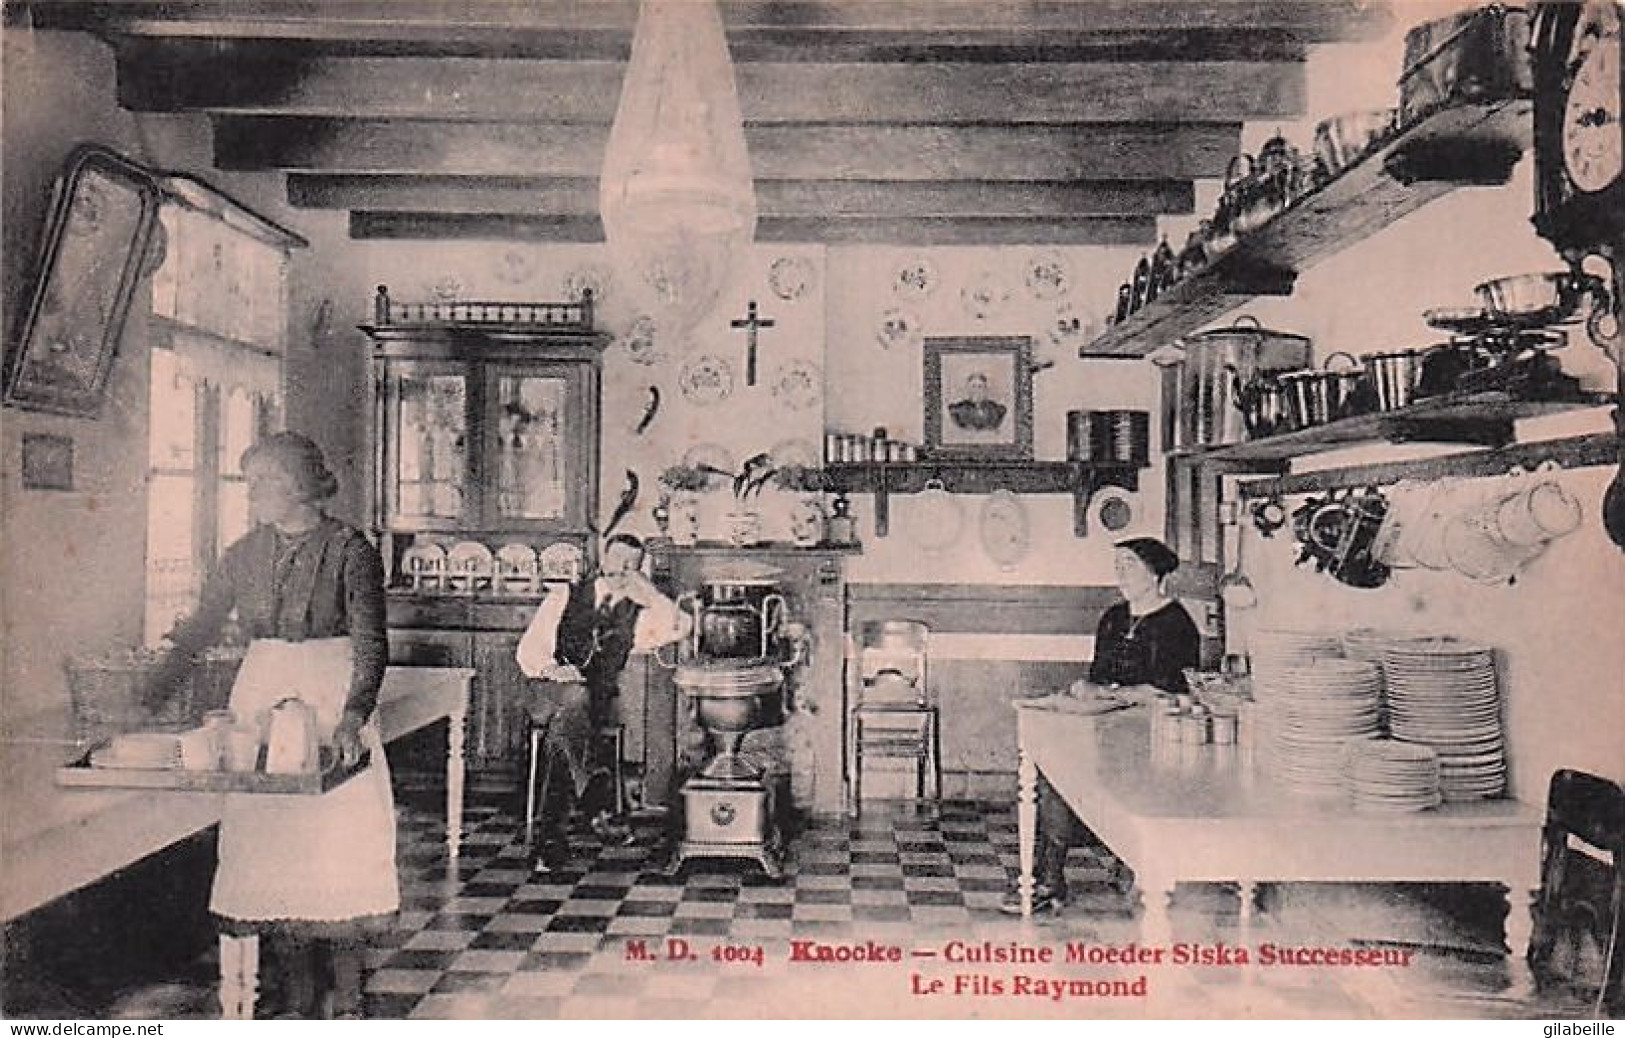 KNOKKE - KNOCKE Le ZOUTE - Cuisine Moeder Siska, Successeur Le Fils Raymond - 1923 - Knokke